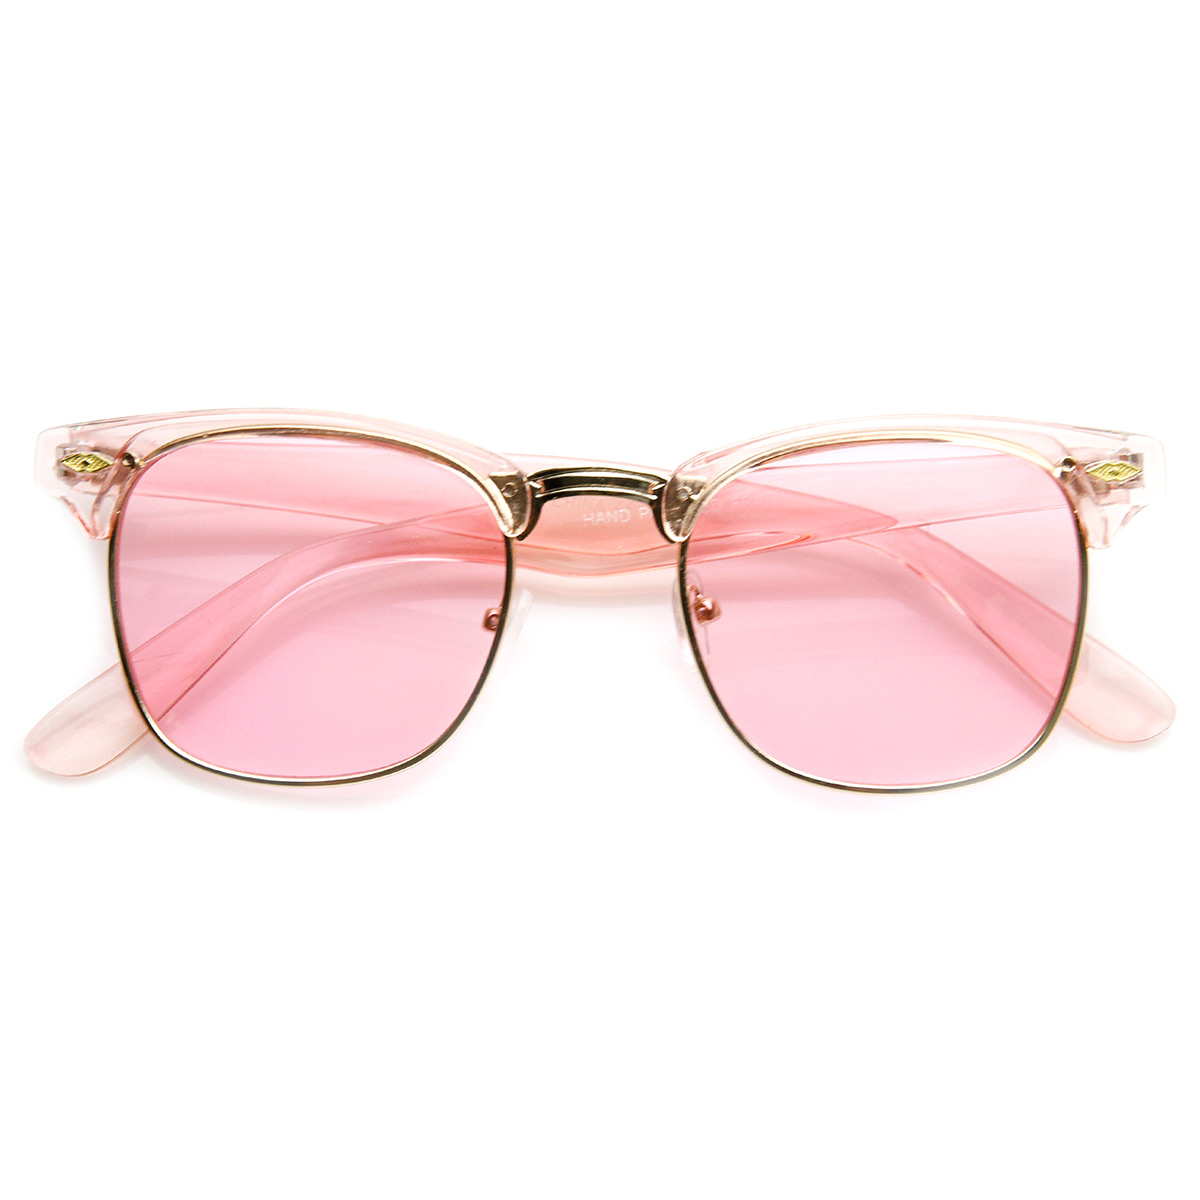 Colorful Half Frame Semi Rimless Horn Rimmed Color Tint Sunglasses Ebay